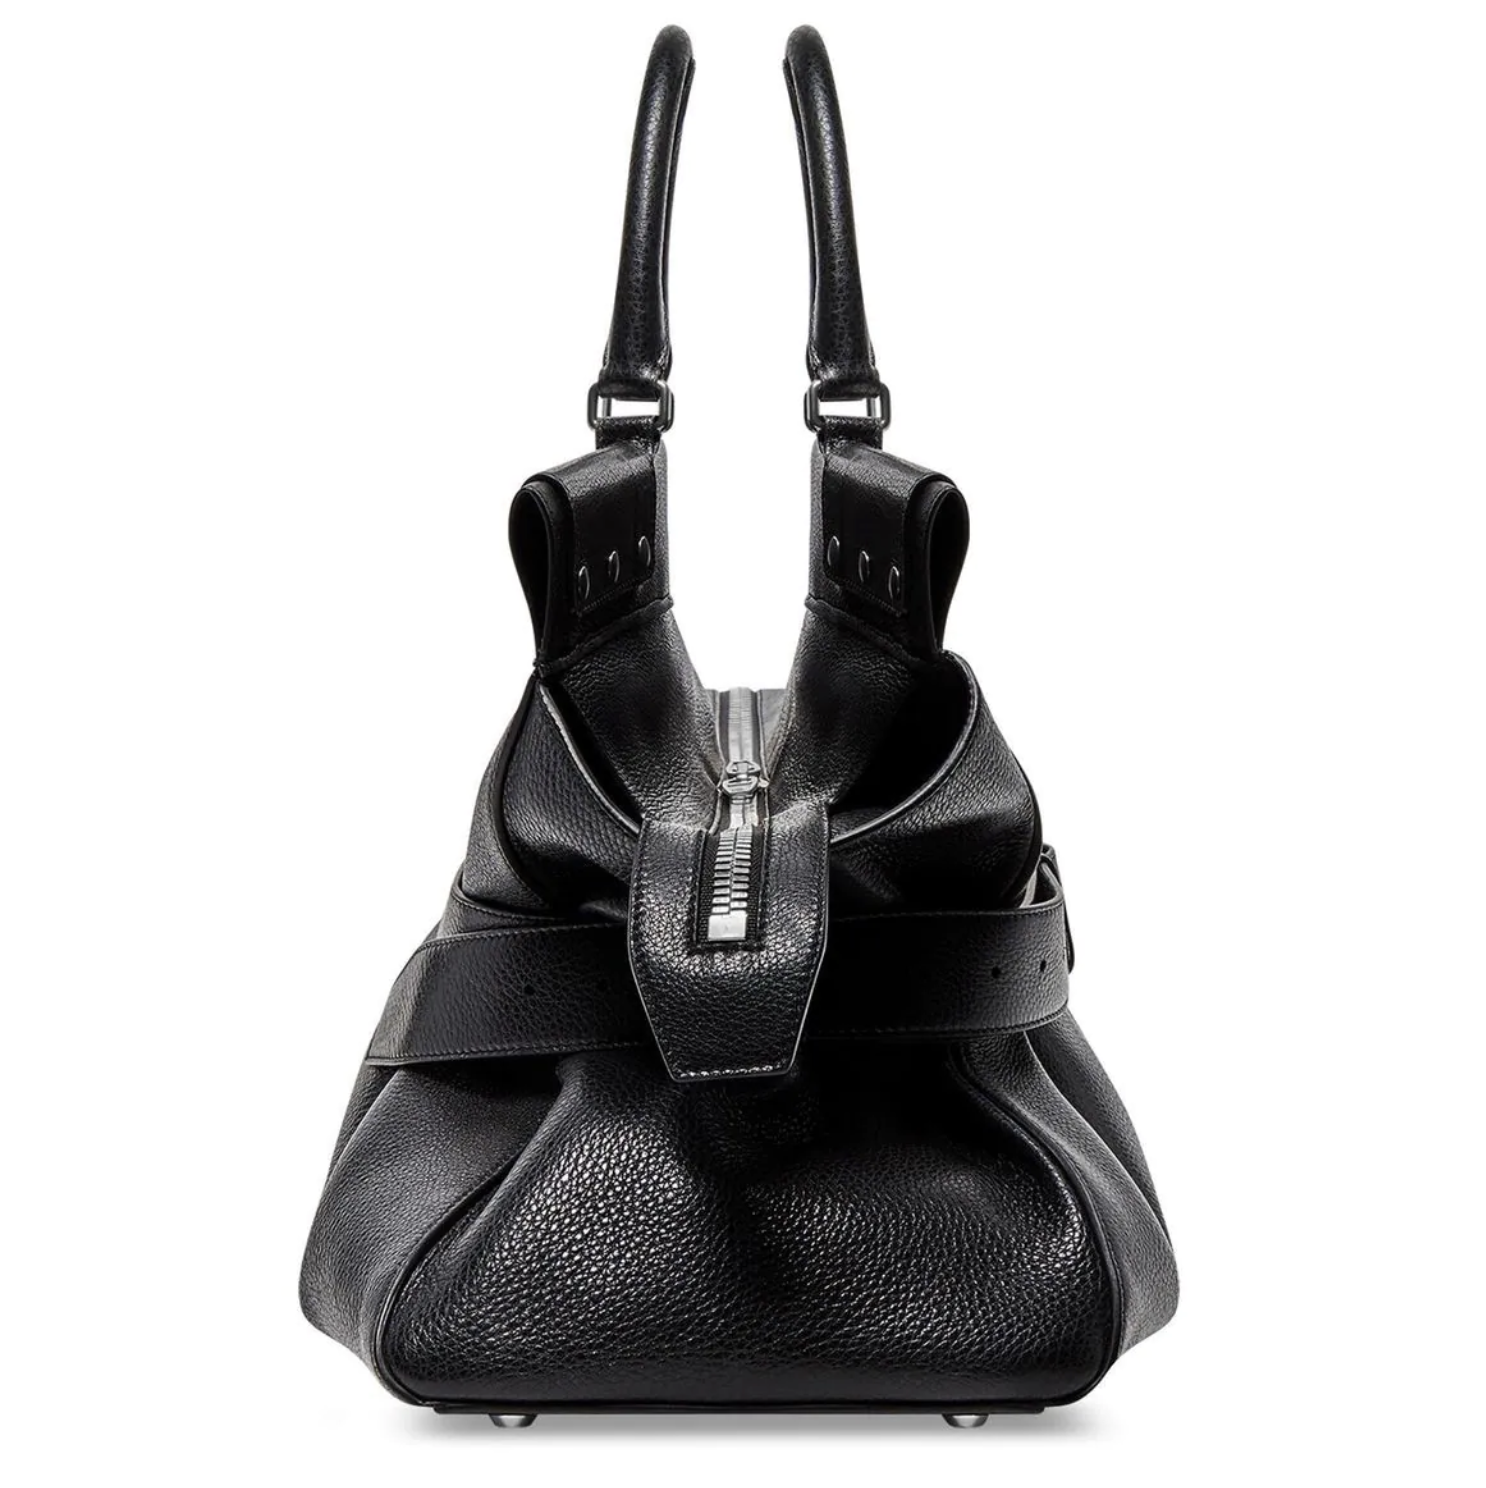 Luxury handbag - Balenciaga tote bag in black nylon